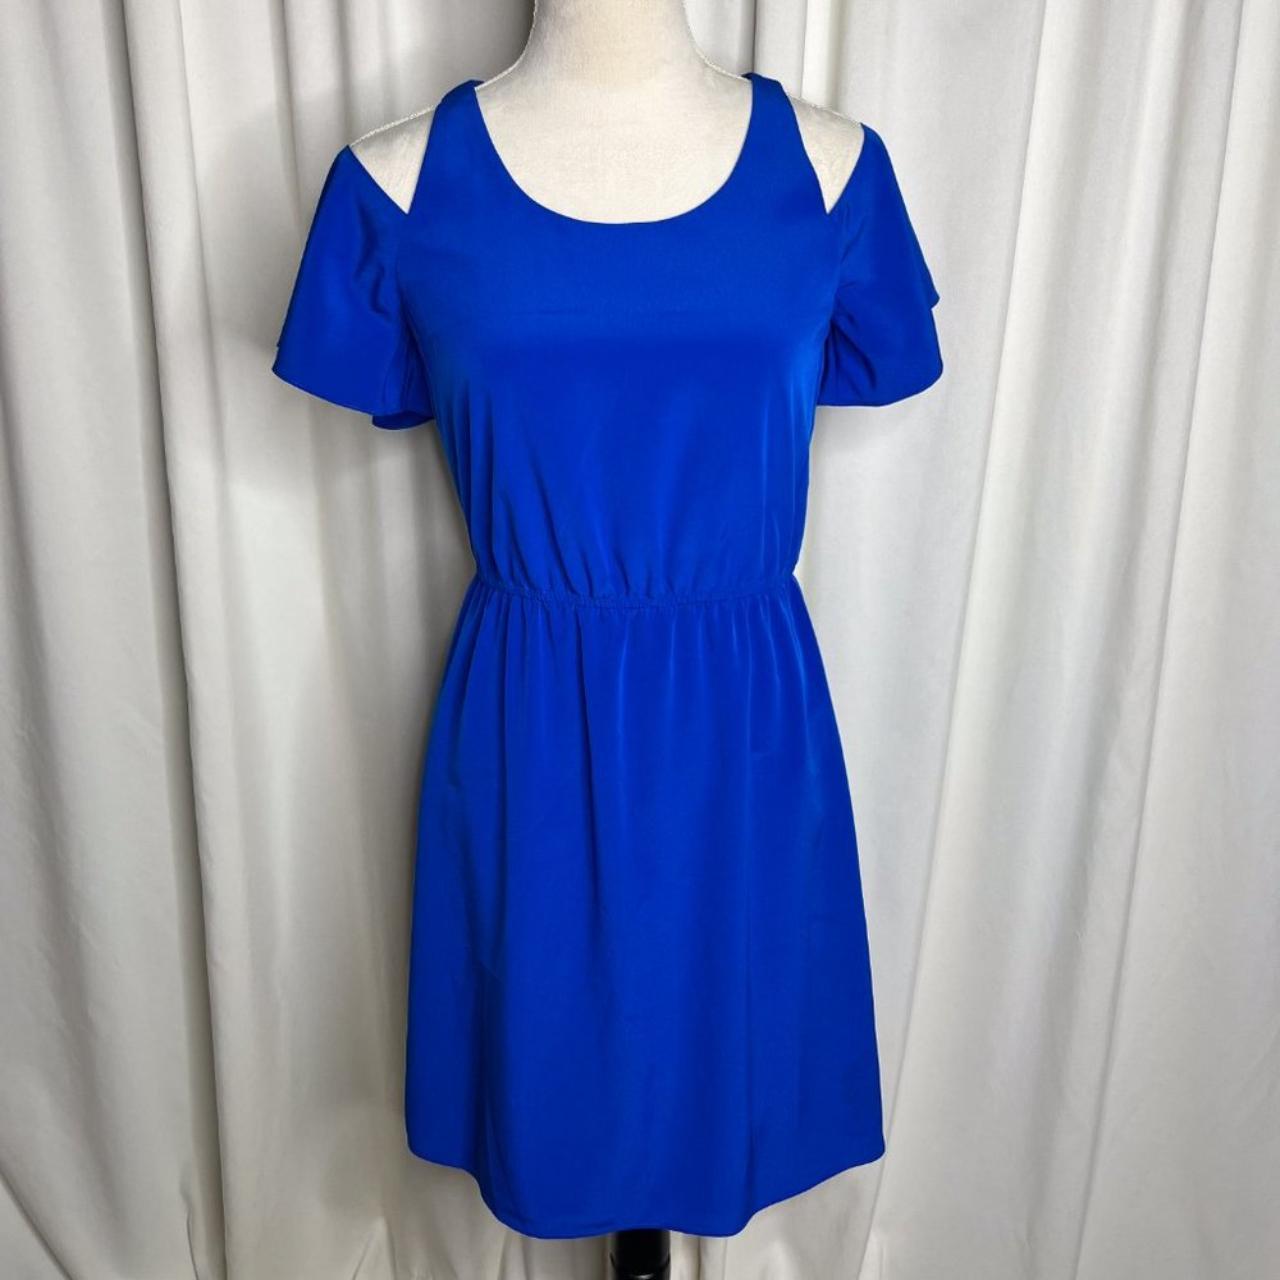 Gianni Bini Midi Dress Royal blue color with cut... - Depop